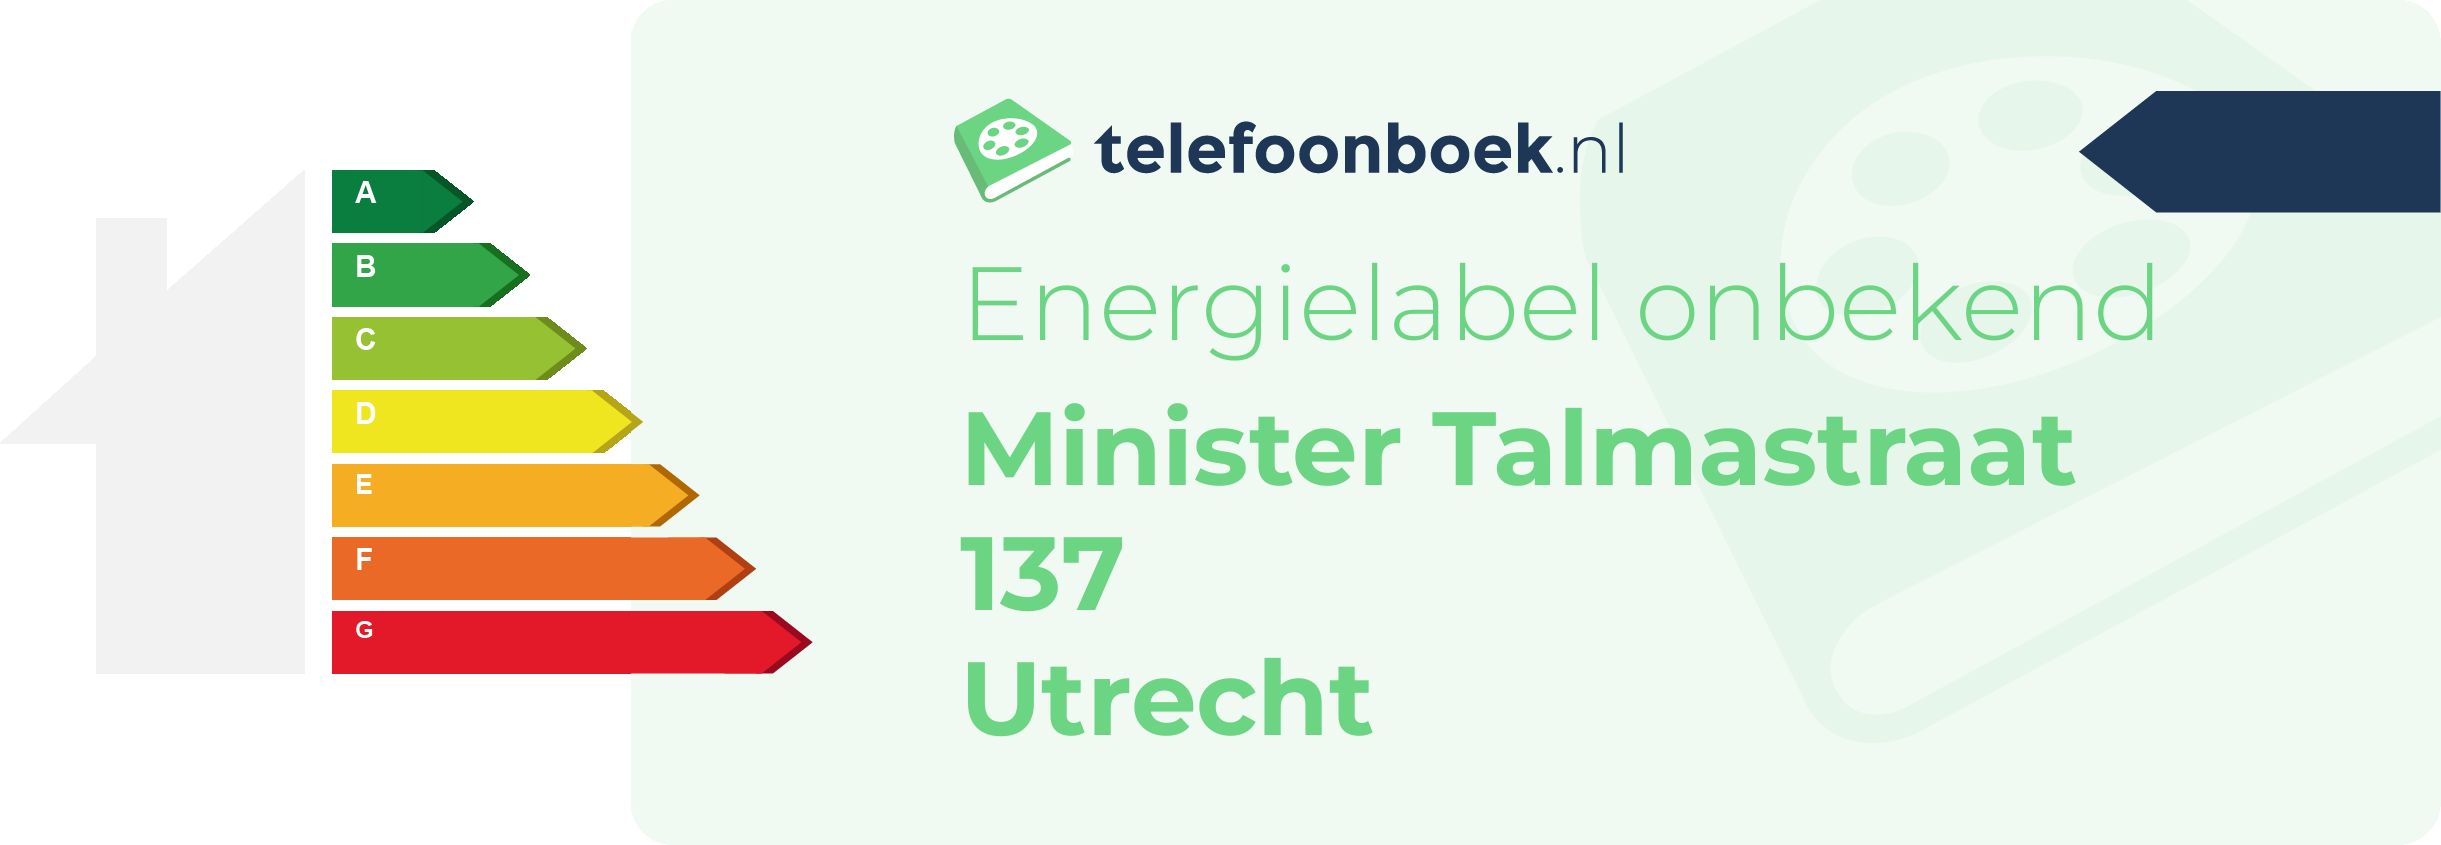 Energielabel Minister Talmastraat 137 Utrecht